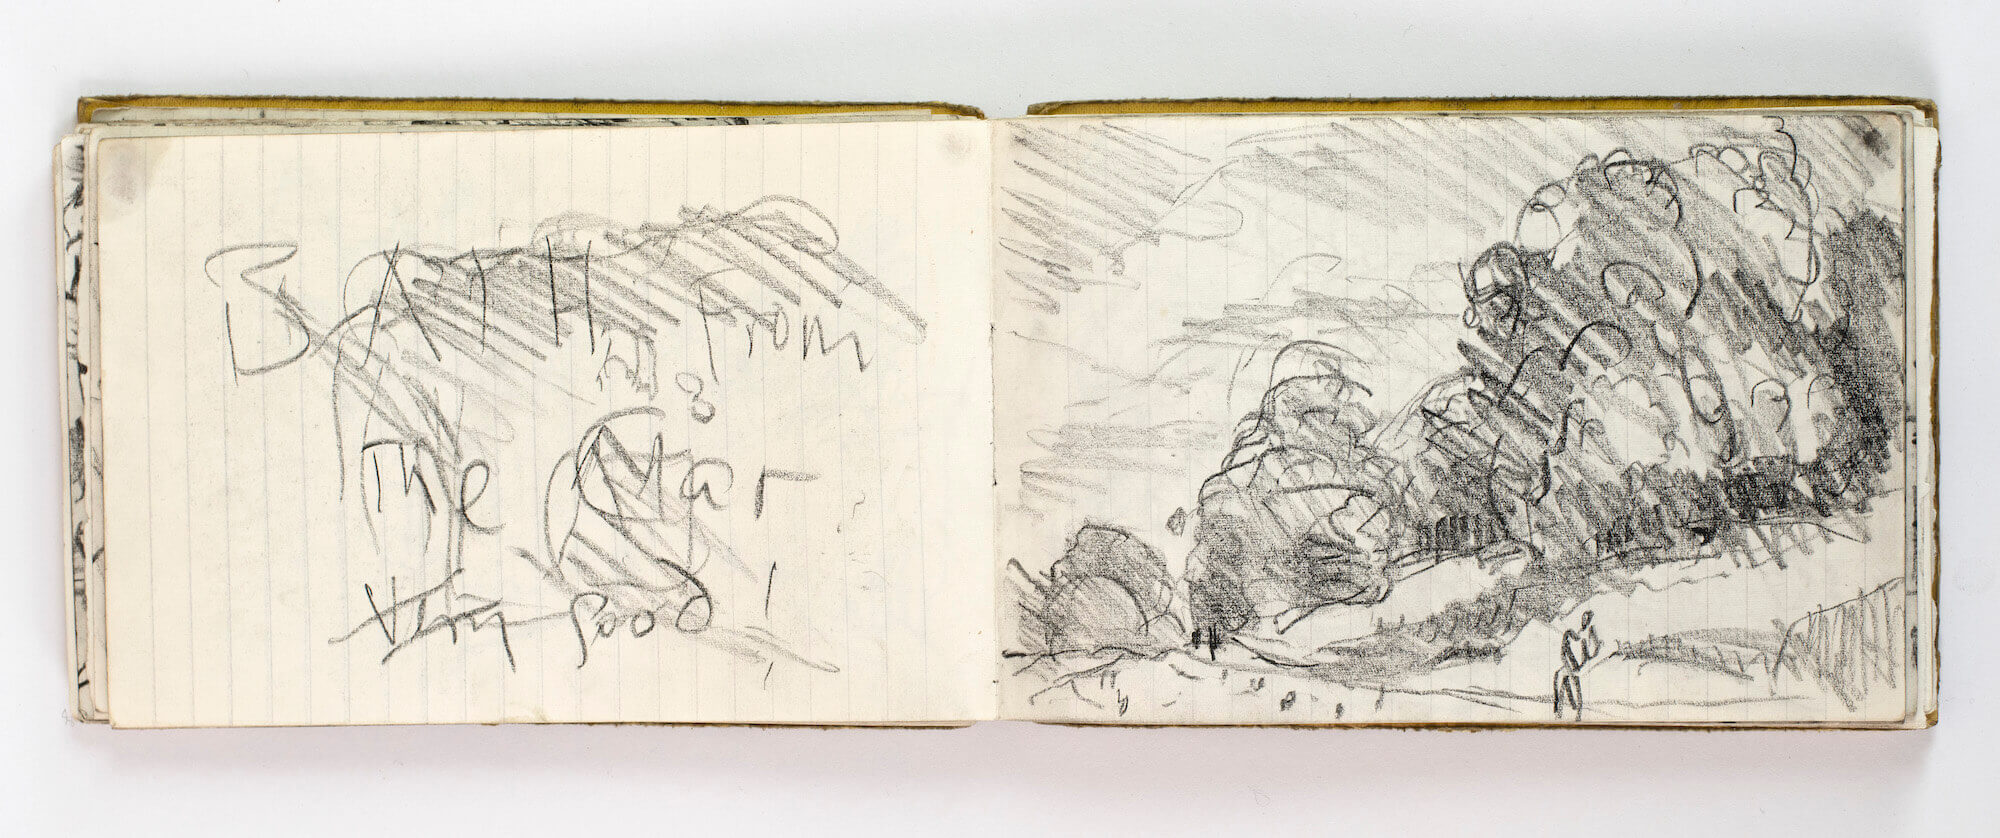 Sargy Mann, 1976 sketchbook drawing, (Sargy Mann estate)